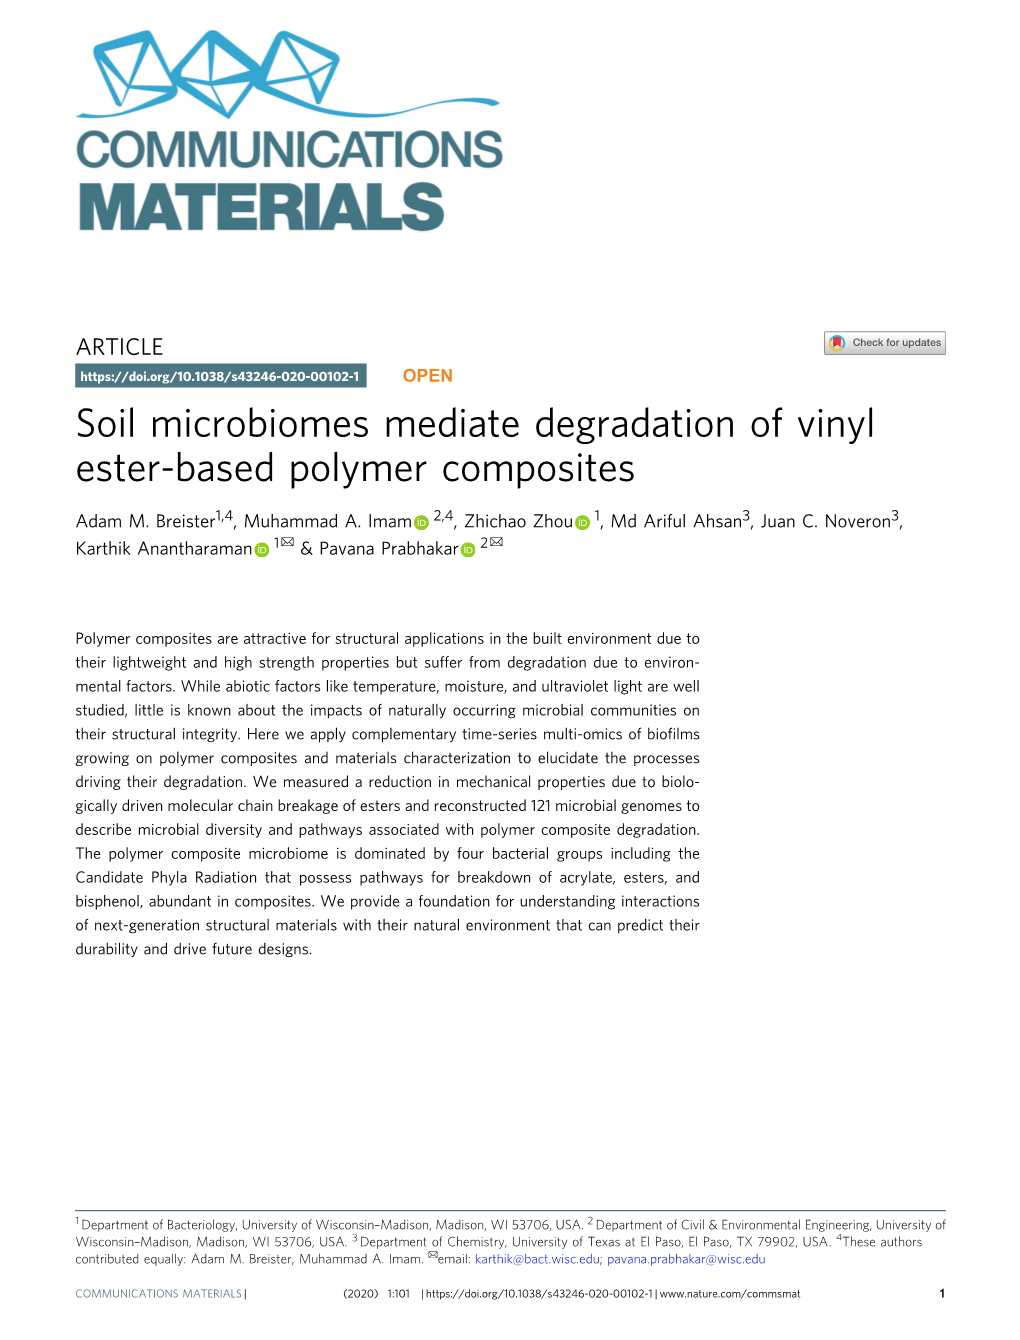 Soil Microbiomes Mediate Degradation of Vinyl Ester-Based Polymer Composites